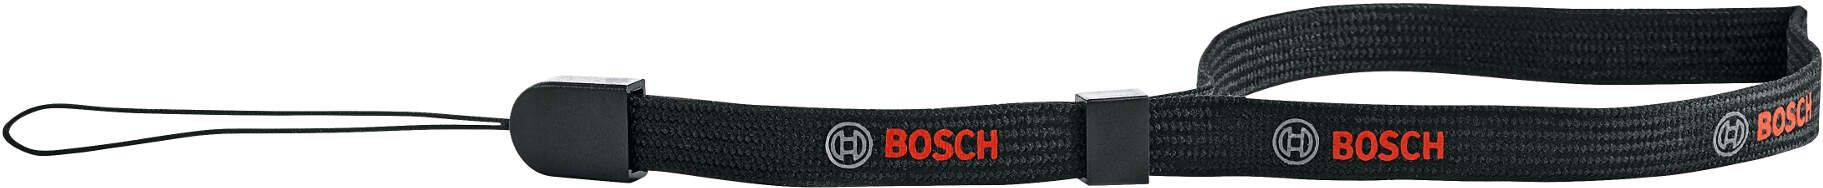 Bosch GlassVac akumulatorski perač za prozore (06008B7000)